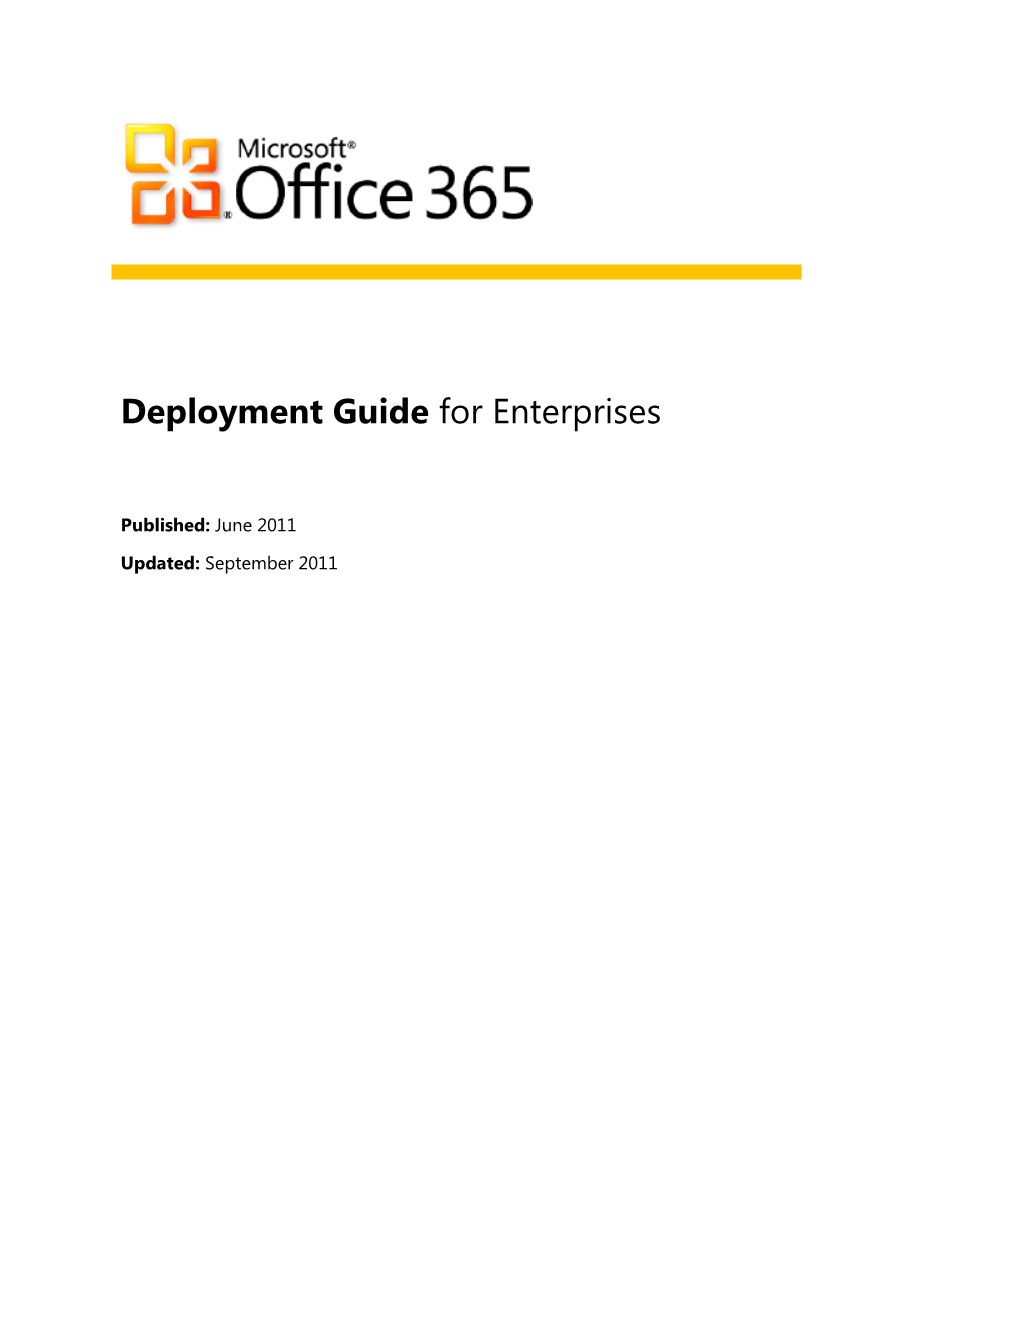 Microsoft Office 365 for Enterprises Deployment Guide